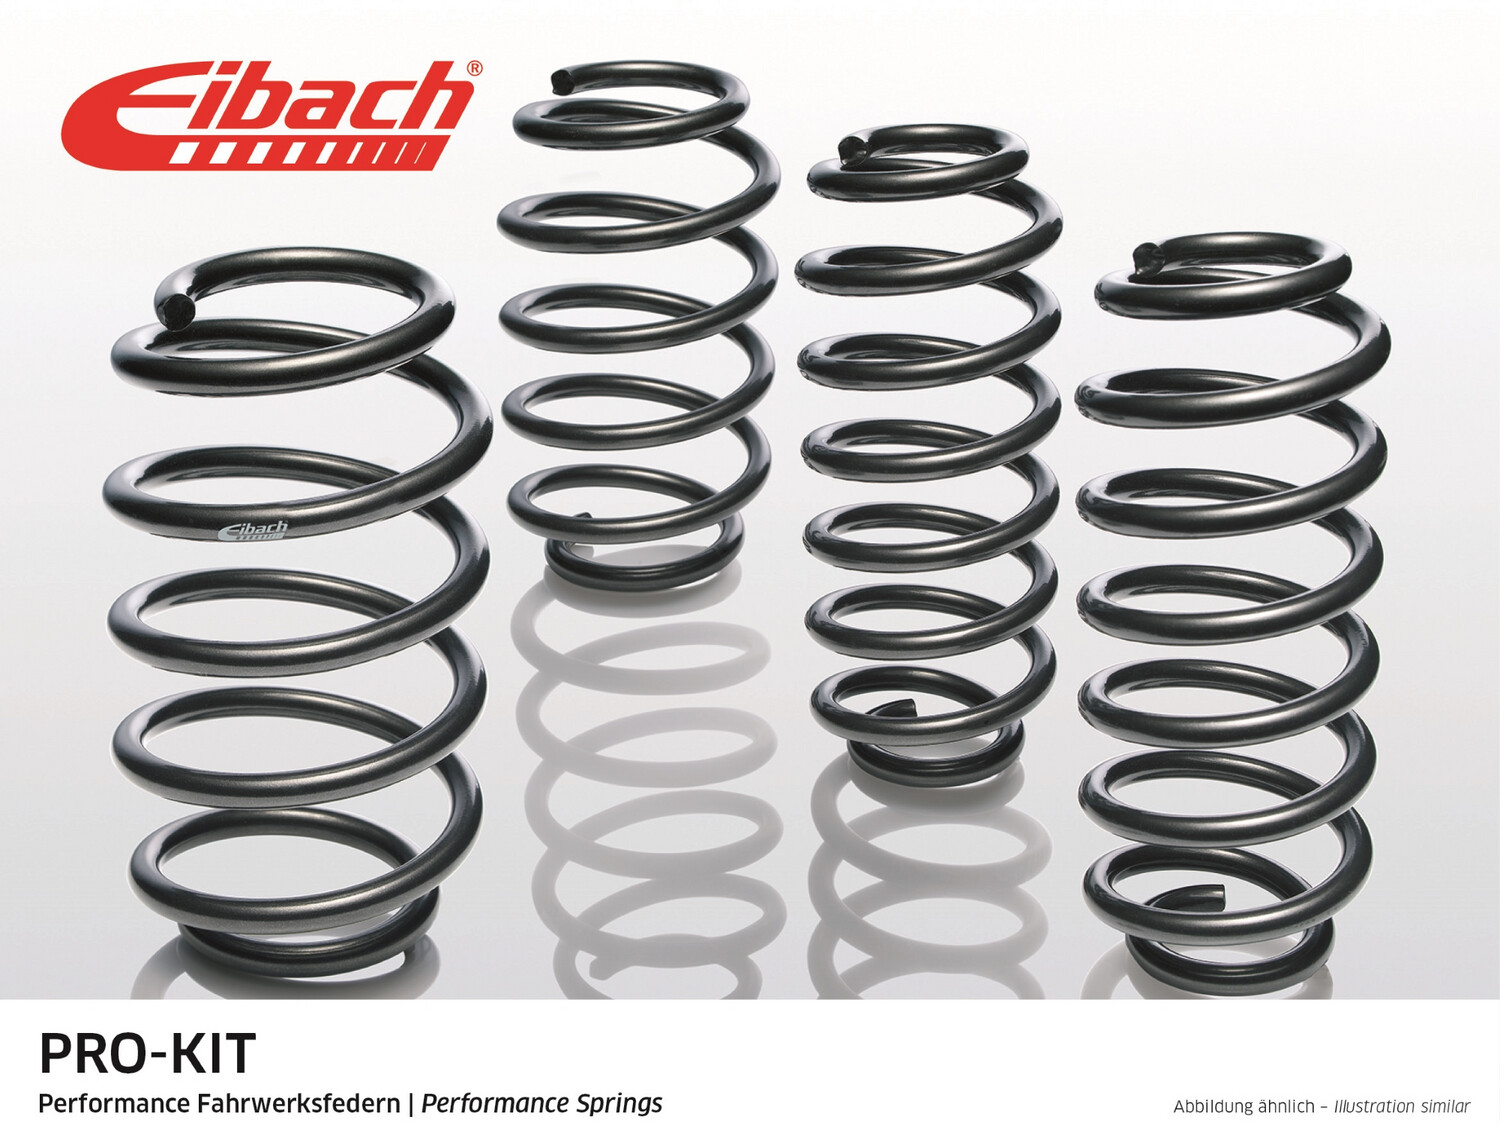 BMW 3 Series E90 (6cyl engines) - Eibach Pro-Kit Lowering Spring Kit